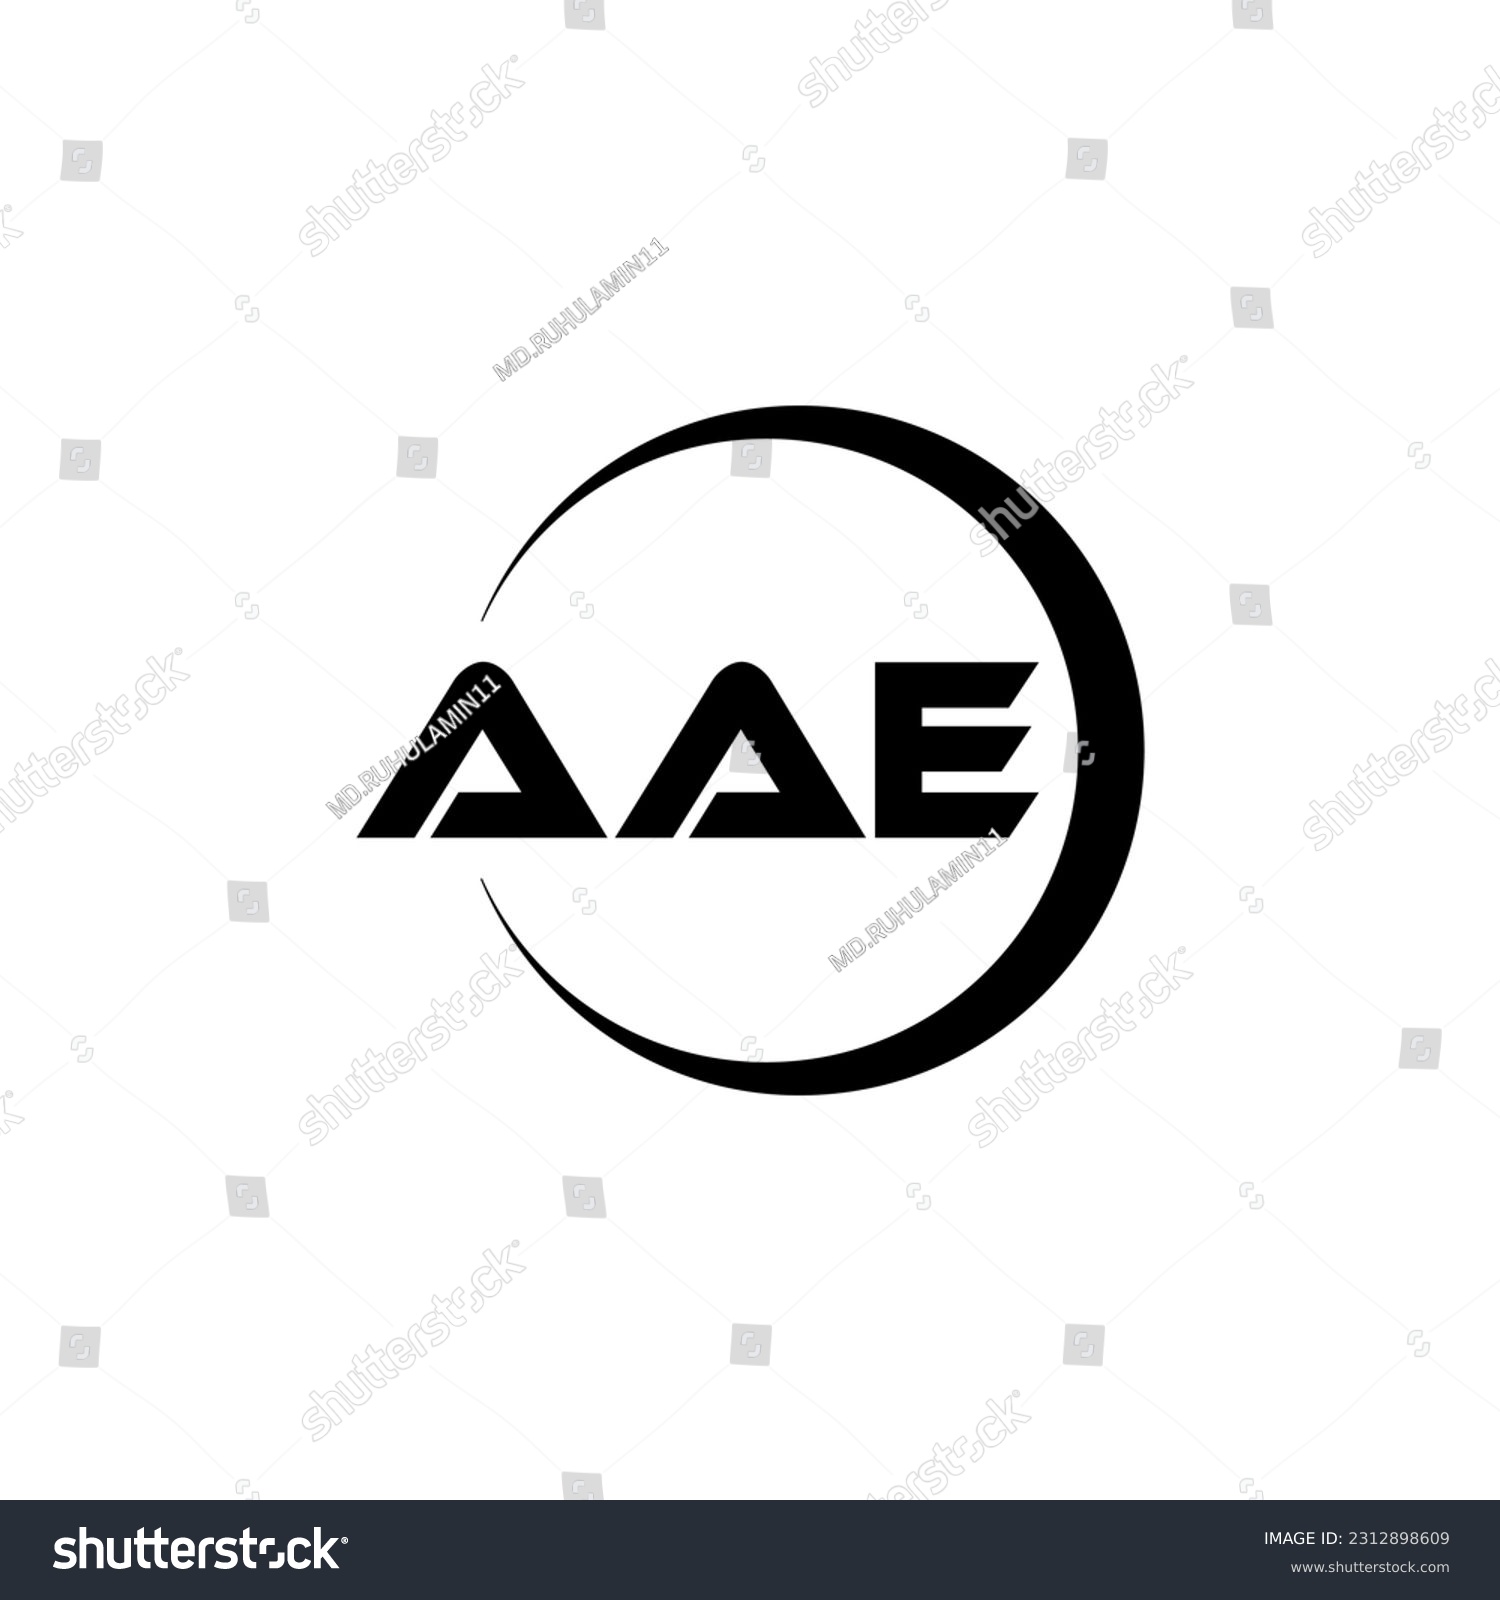 SVG of AAE letter logo design in illustration. Vector logo, calligraphy designs for logo, Poster, Invitation, etc. svg